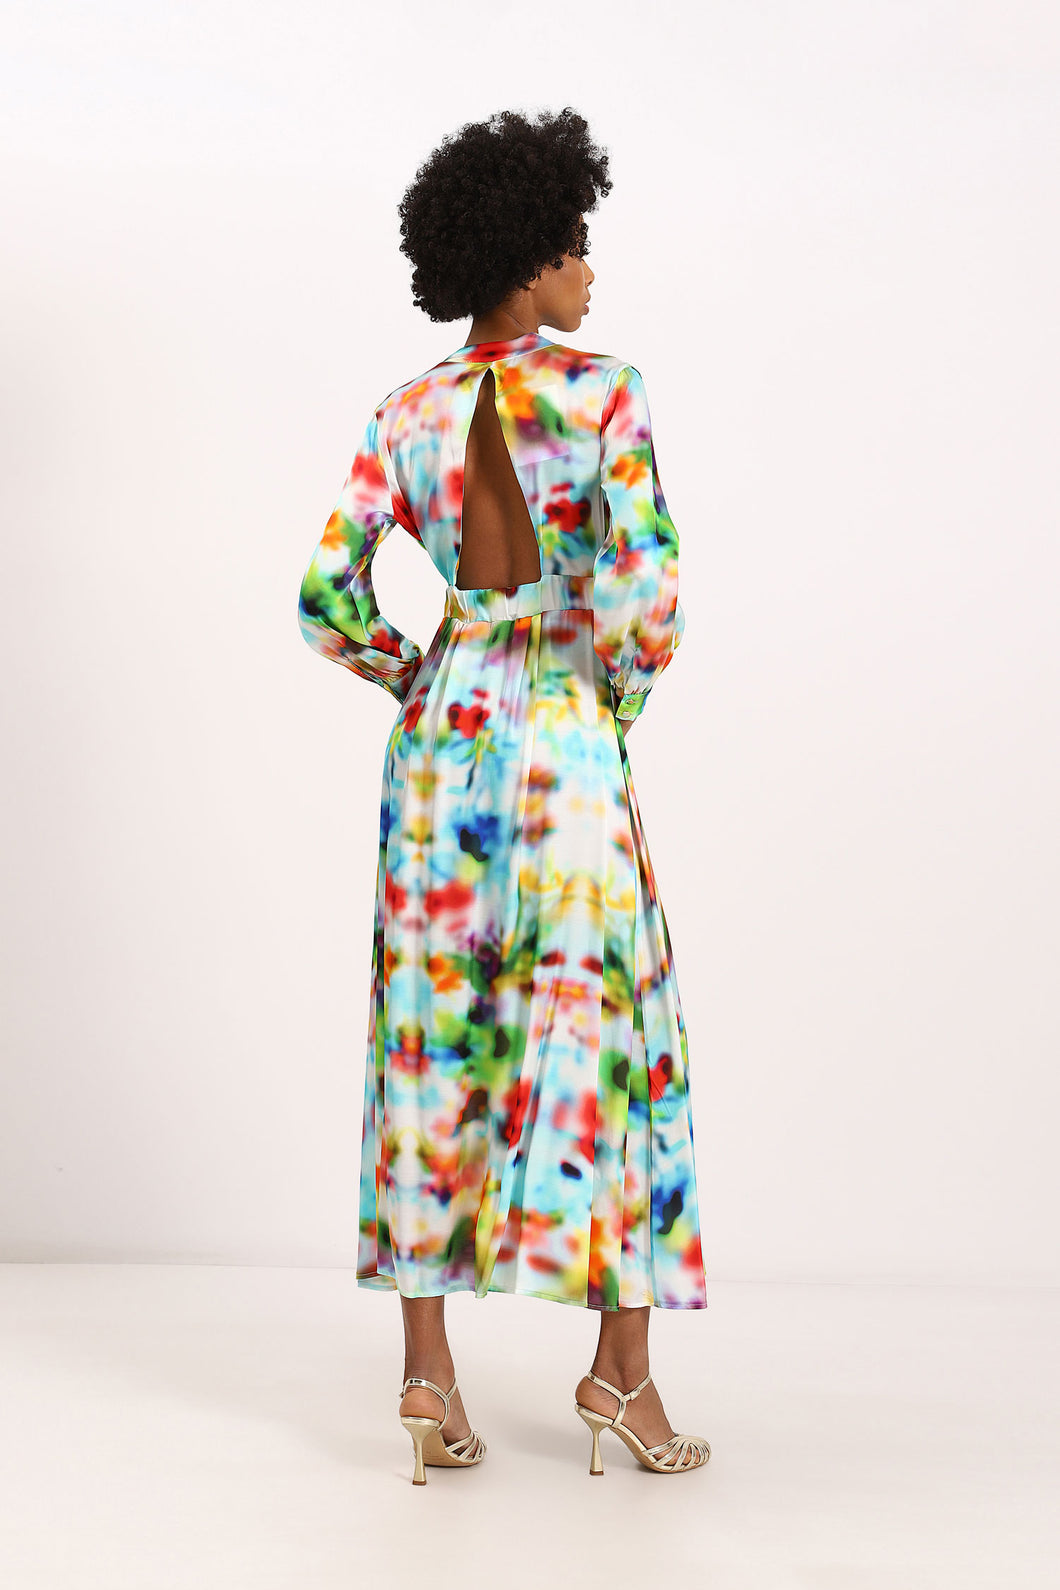 Dixie Rainbow Graphic Blurred Dress